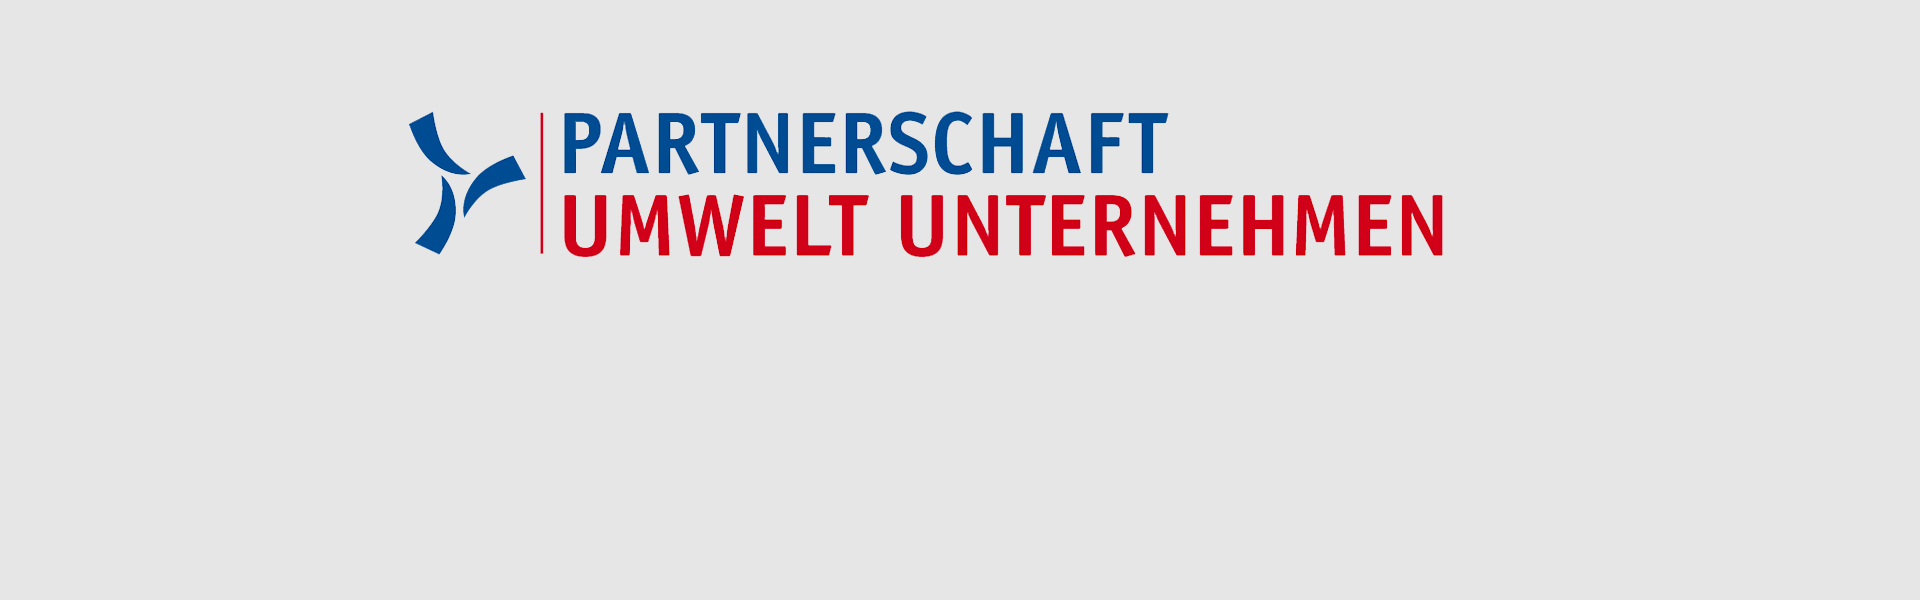 Partnership Environment Companies Bremen